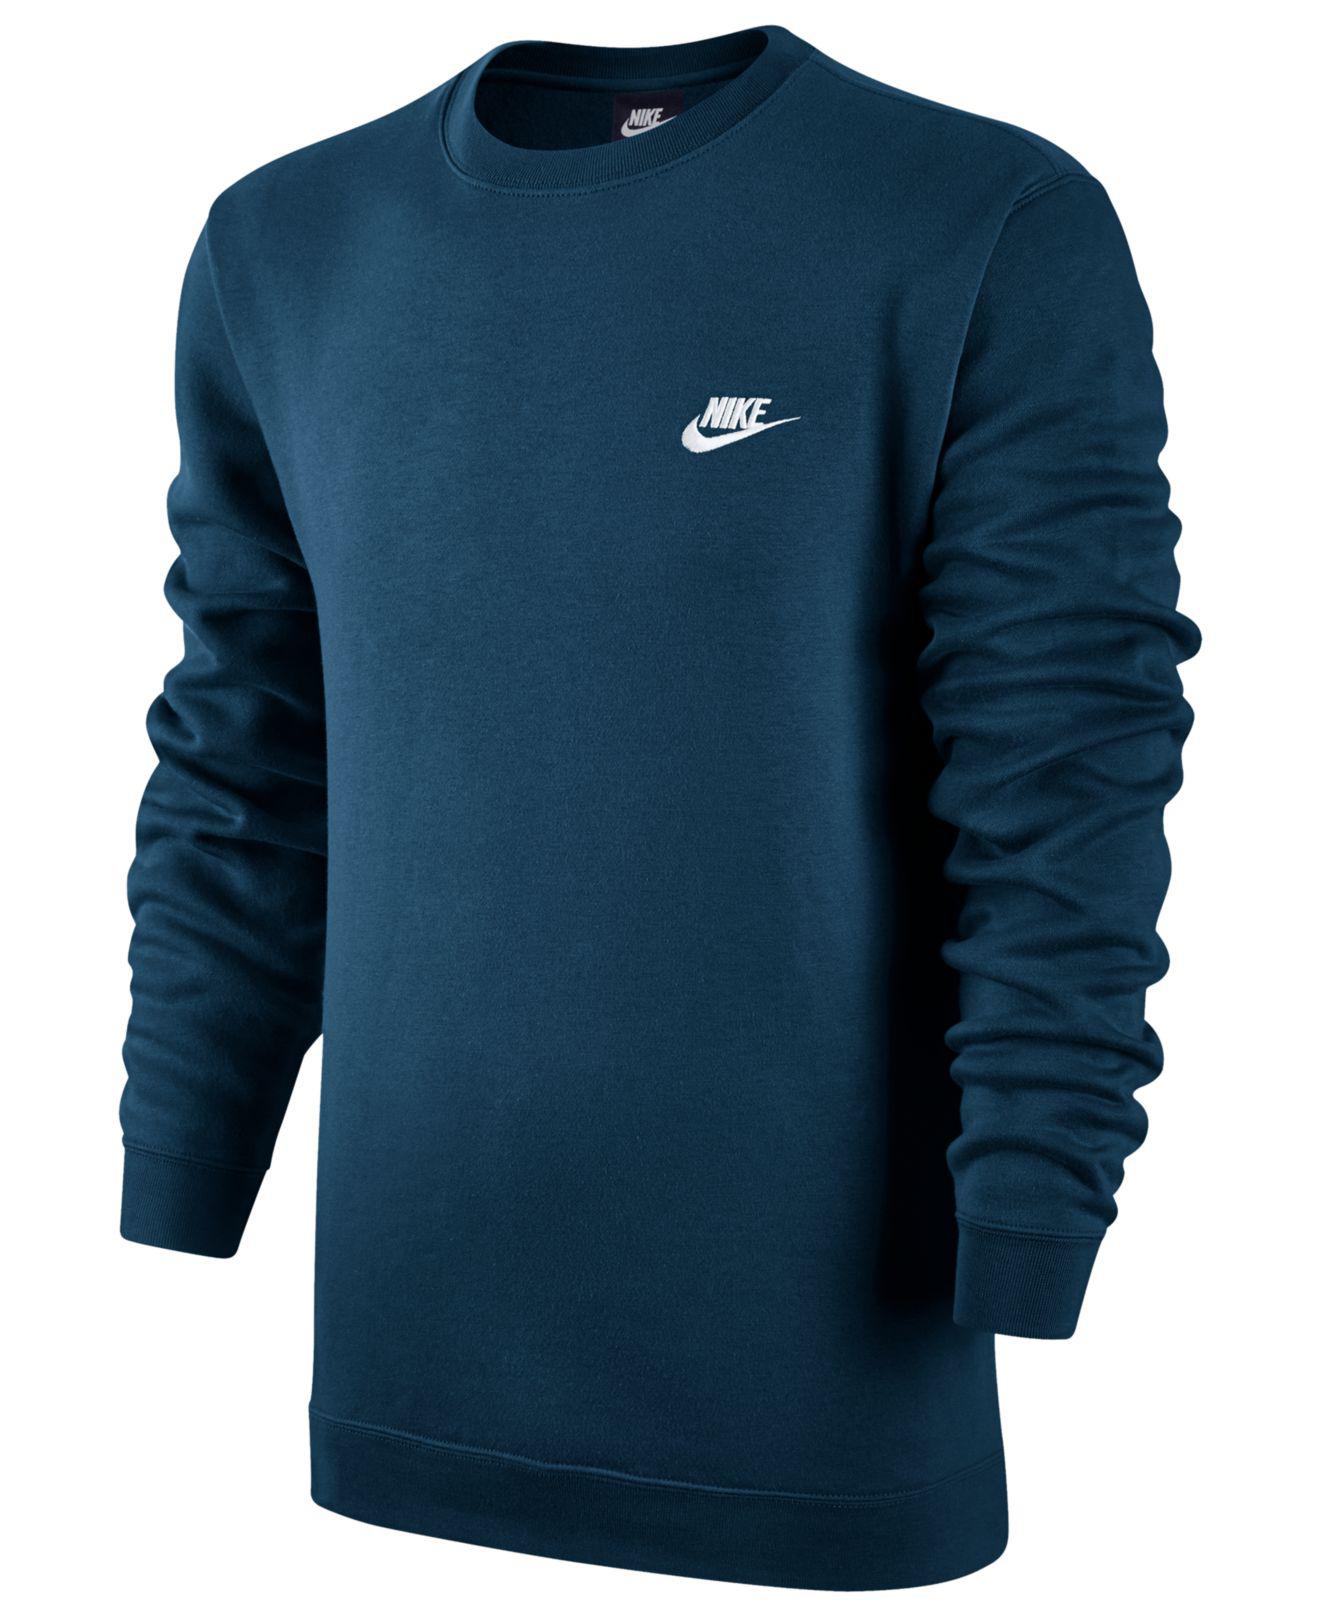 Nike Crewneck Fleece Sweatshirt in Blue for Men - Lyst